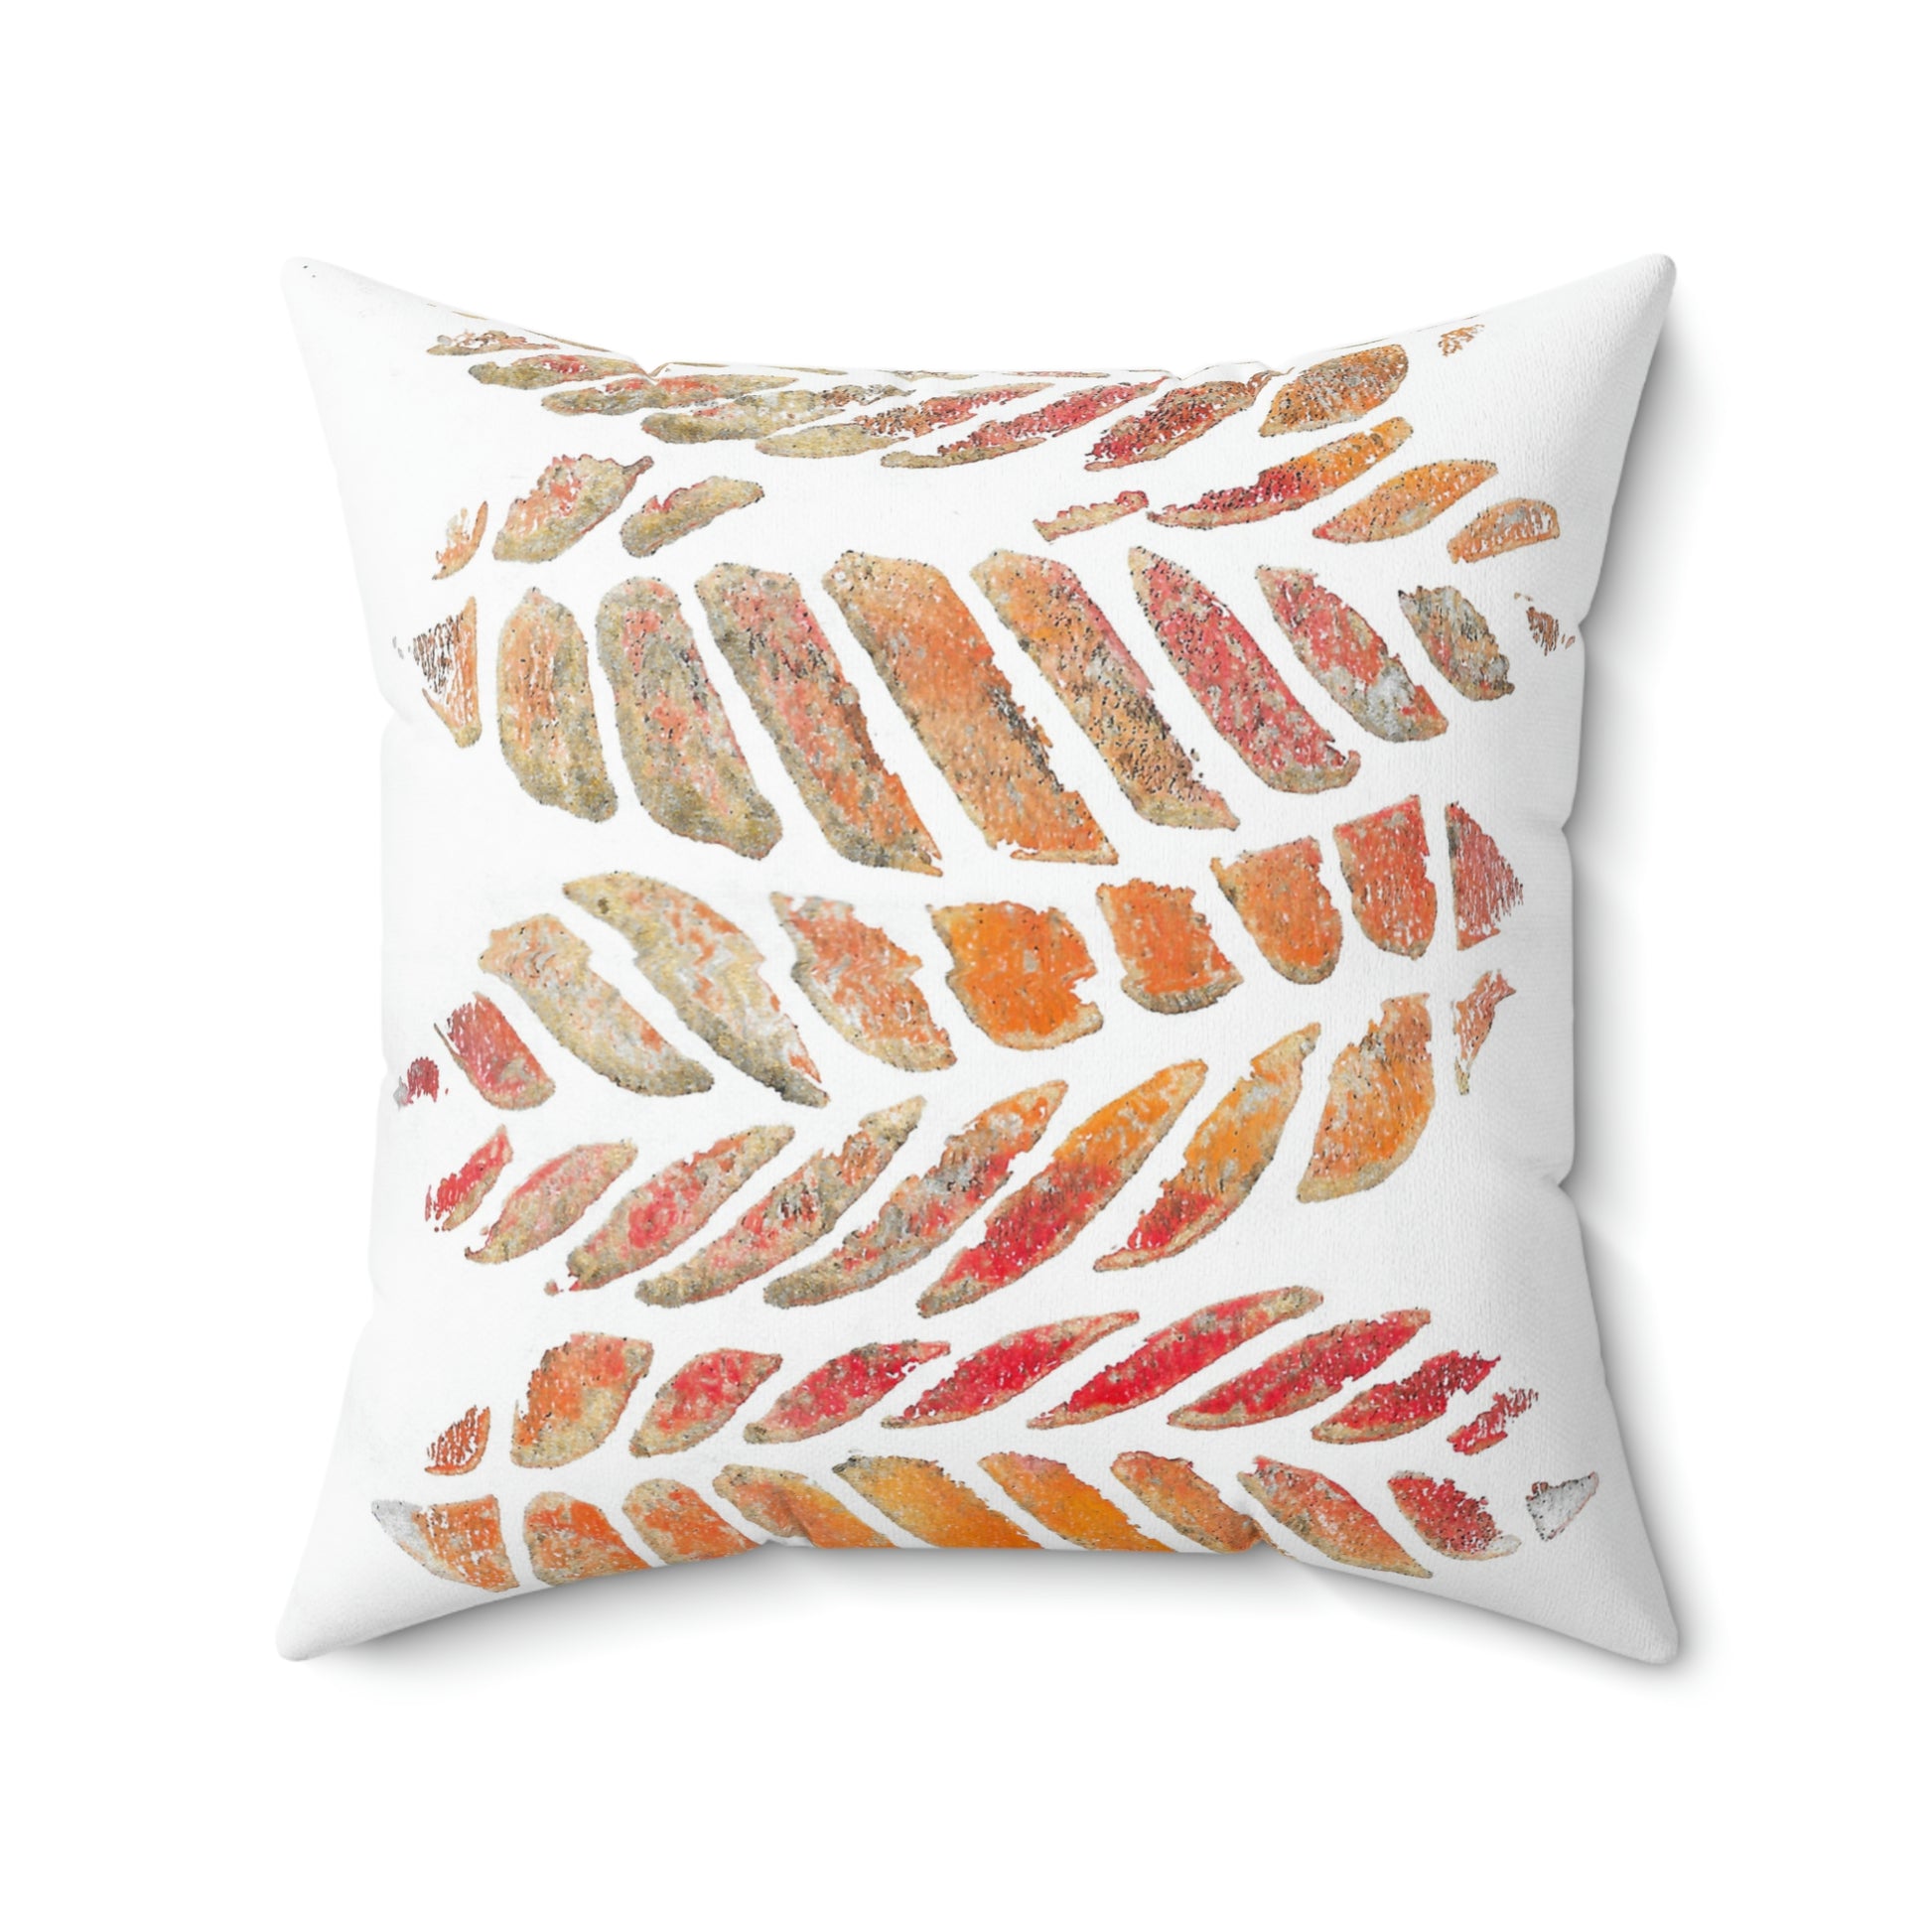 Fire Leaves Square Pillow - Alja Design